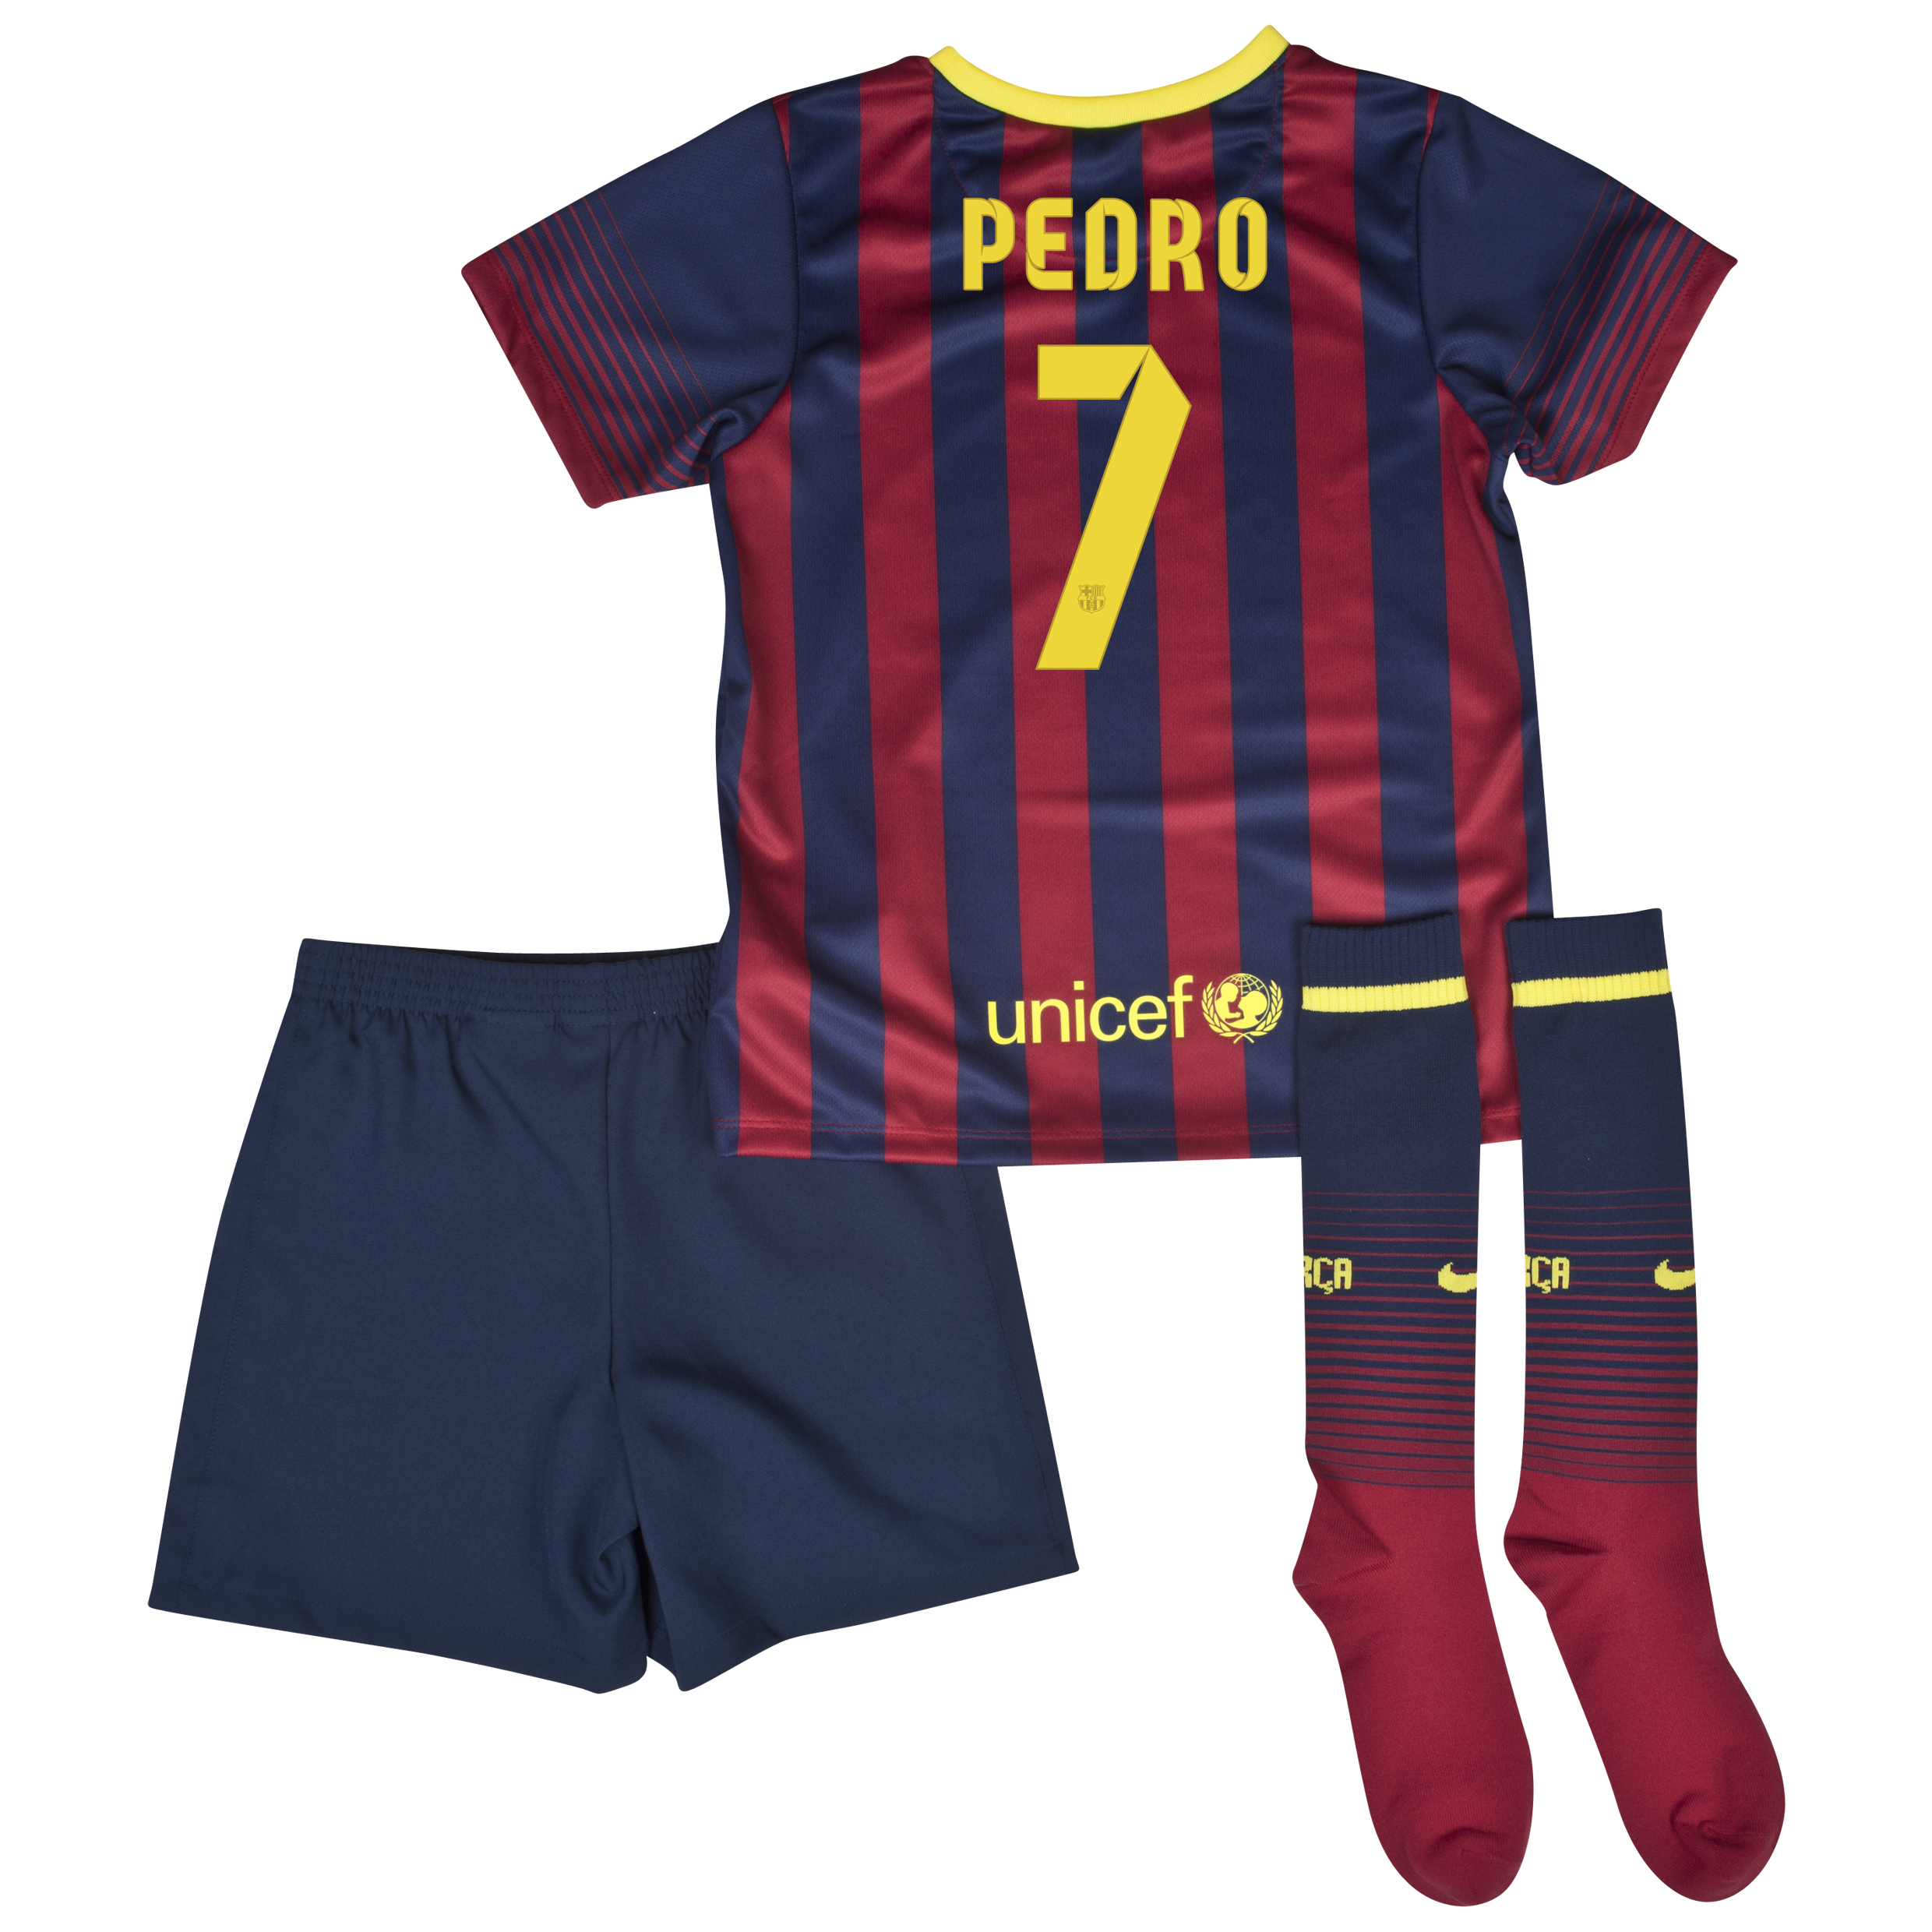 Barcelona Home Kit 2013/14 - Little Boys with Pedro 7 printing